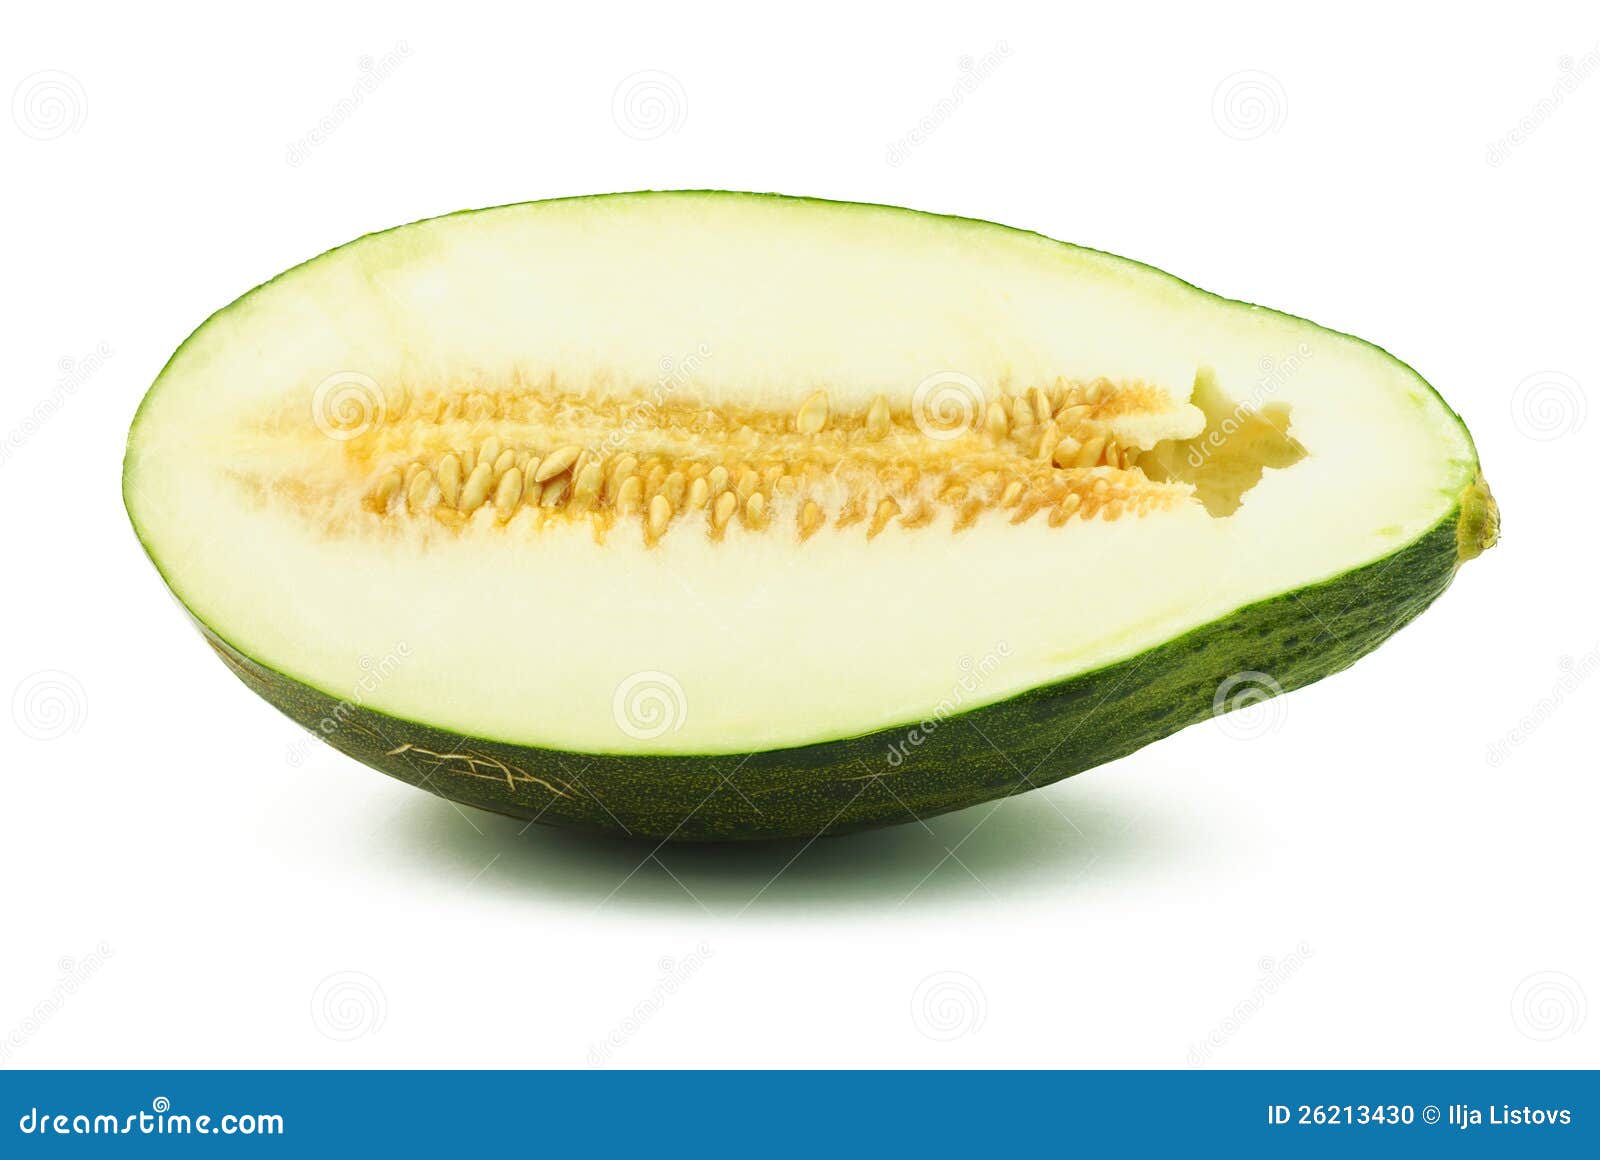 half of piel de sapo melon